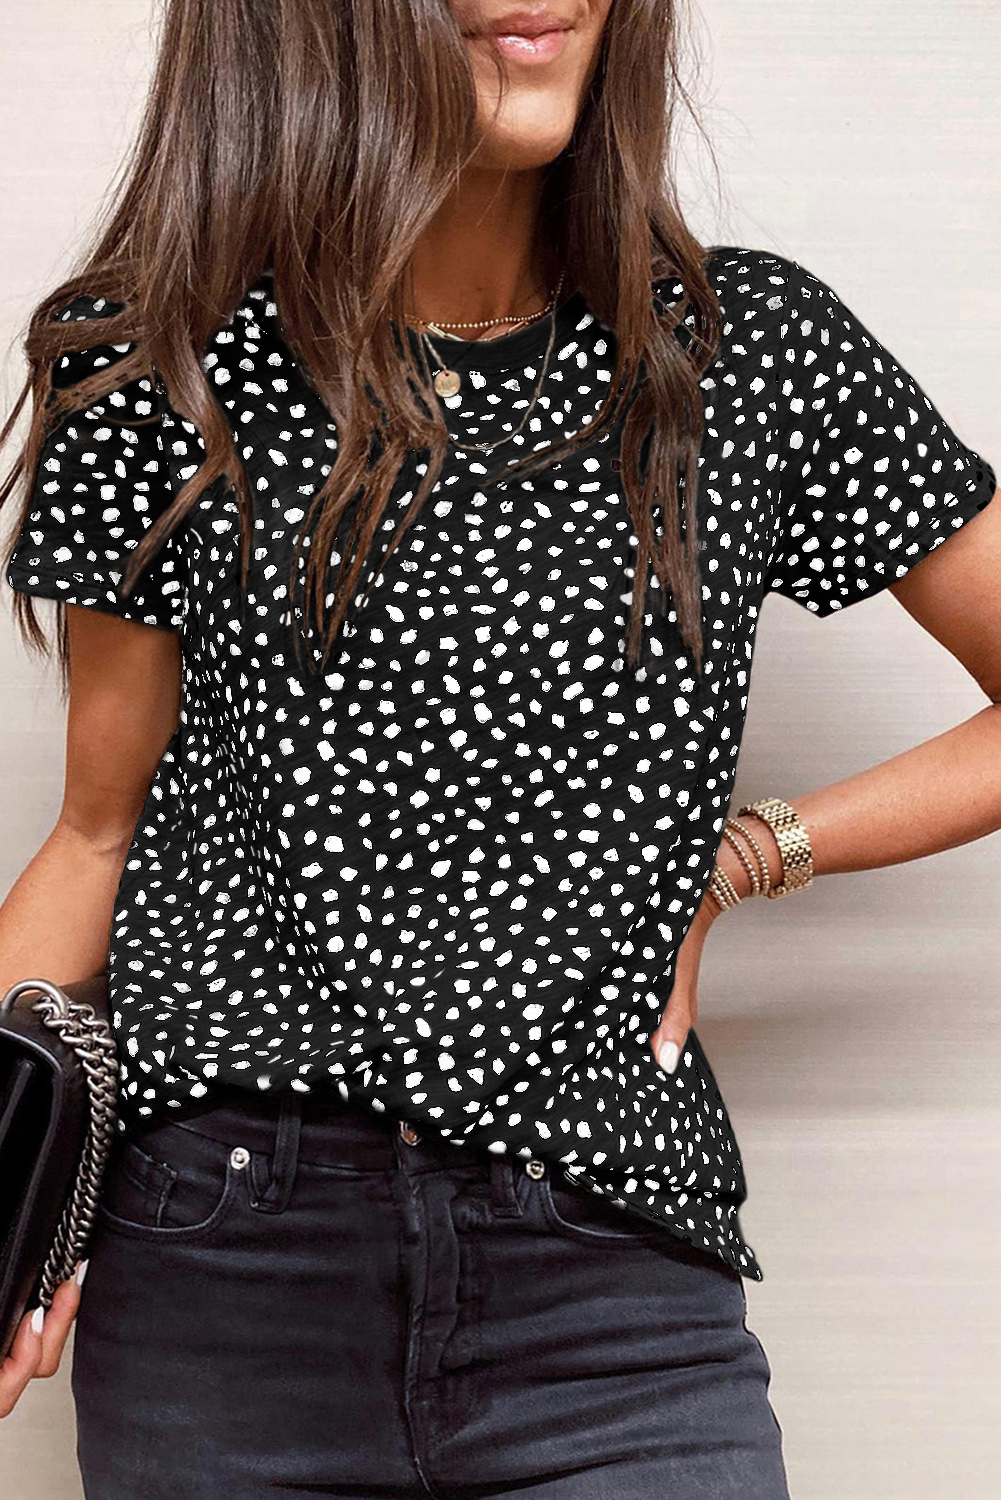 Shewin Wholesale Southern Black Cheetah Print Casual SHORT Sleeve Crew Neck T Shirt